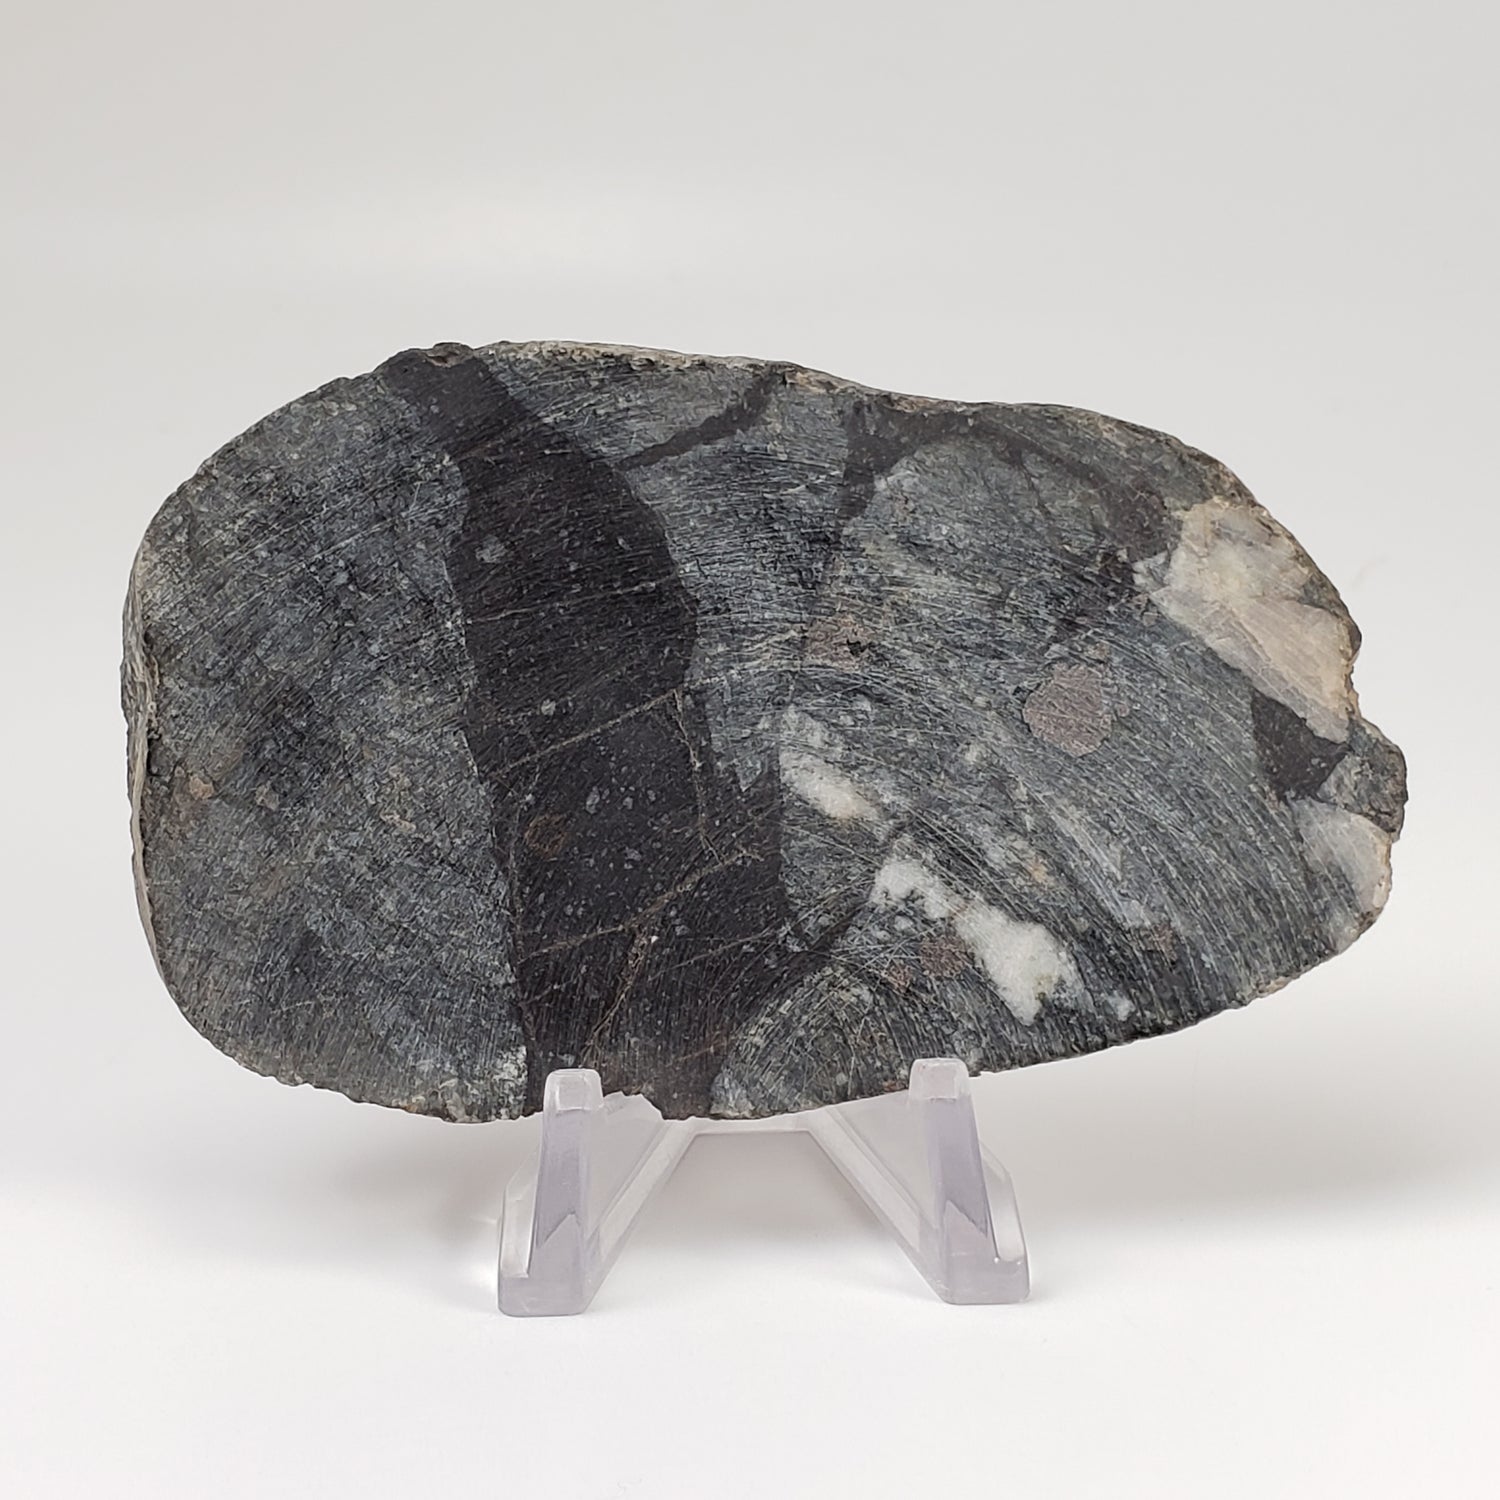 Dellenites Impact Melt Rock |  90.4 grams | HT Tagamite | Dellen Crater, Sweden